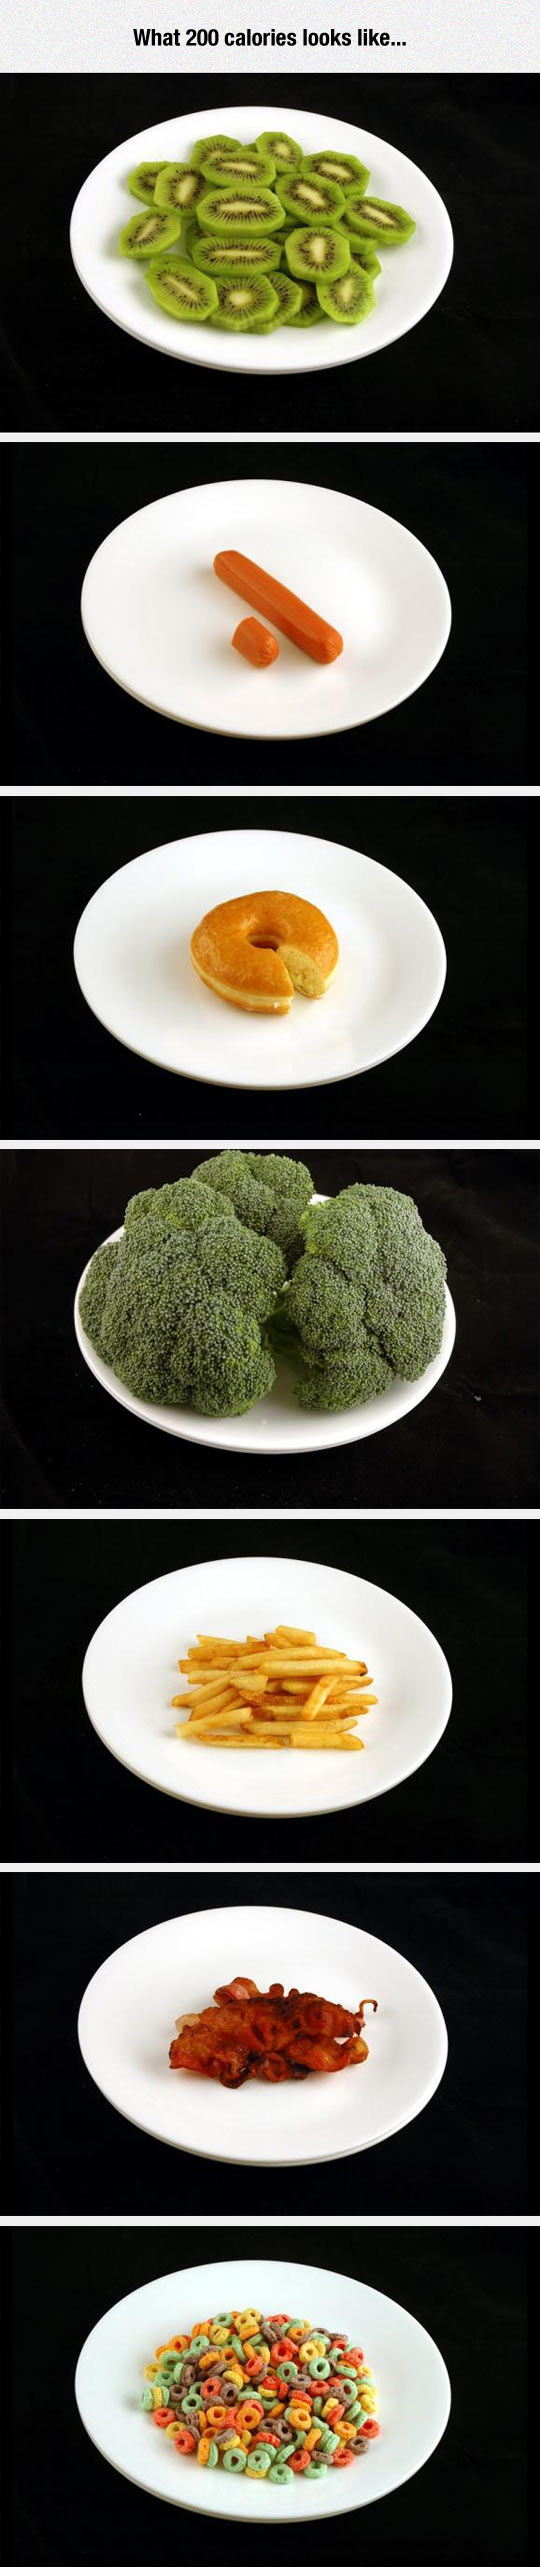 funny-calories-kiwi-sausage-broccoli-fries